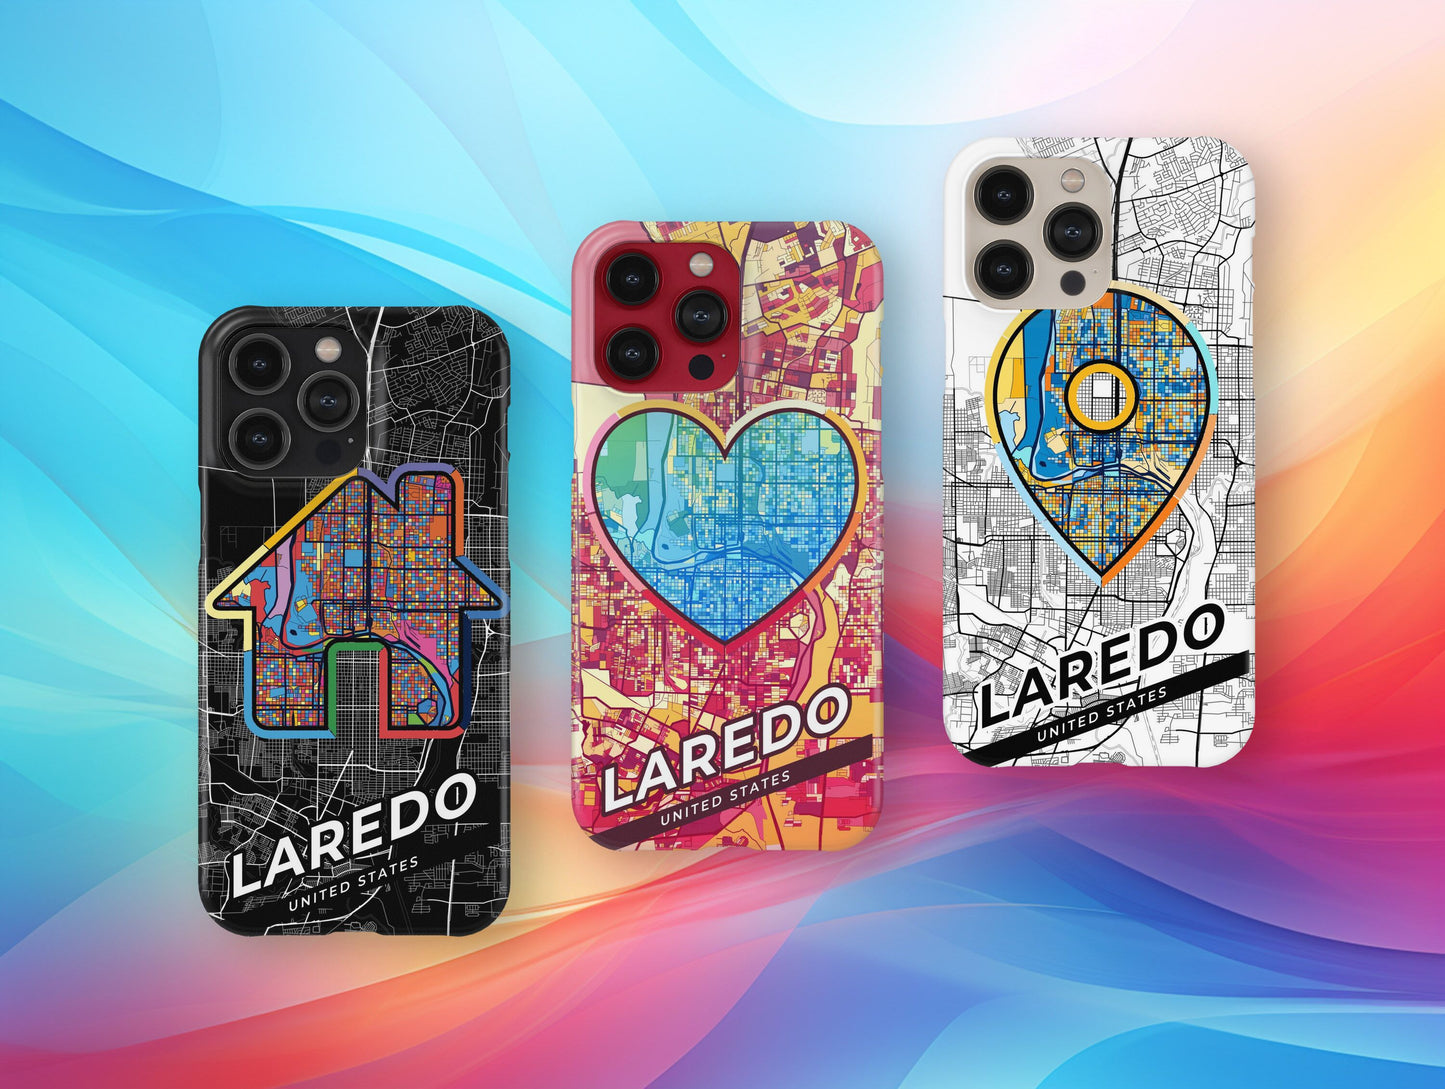 Laredo Texas slim phone case with colorful icon. Birthday, wedding or housewarming gift. Couple match cases.